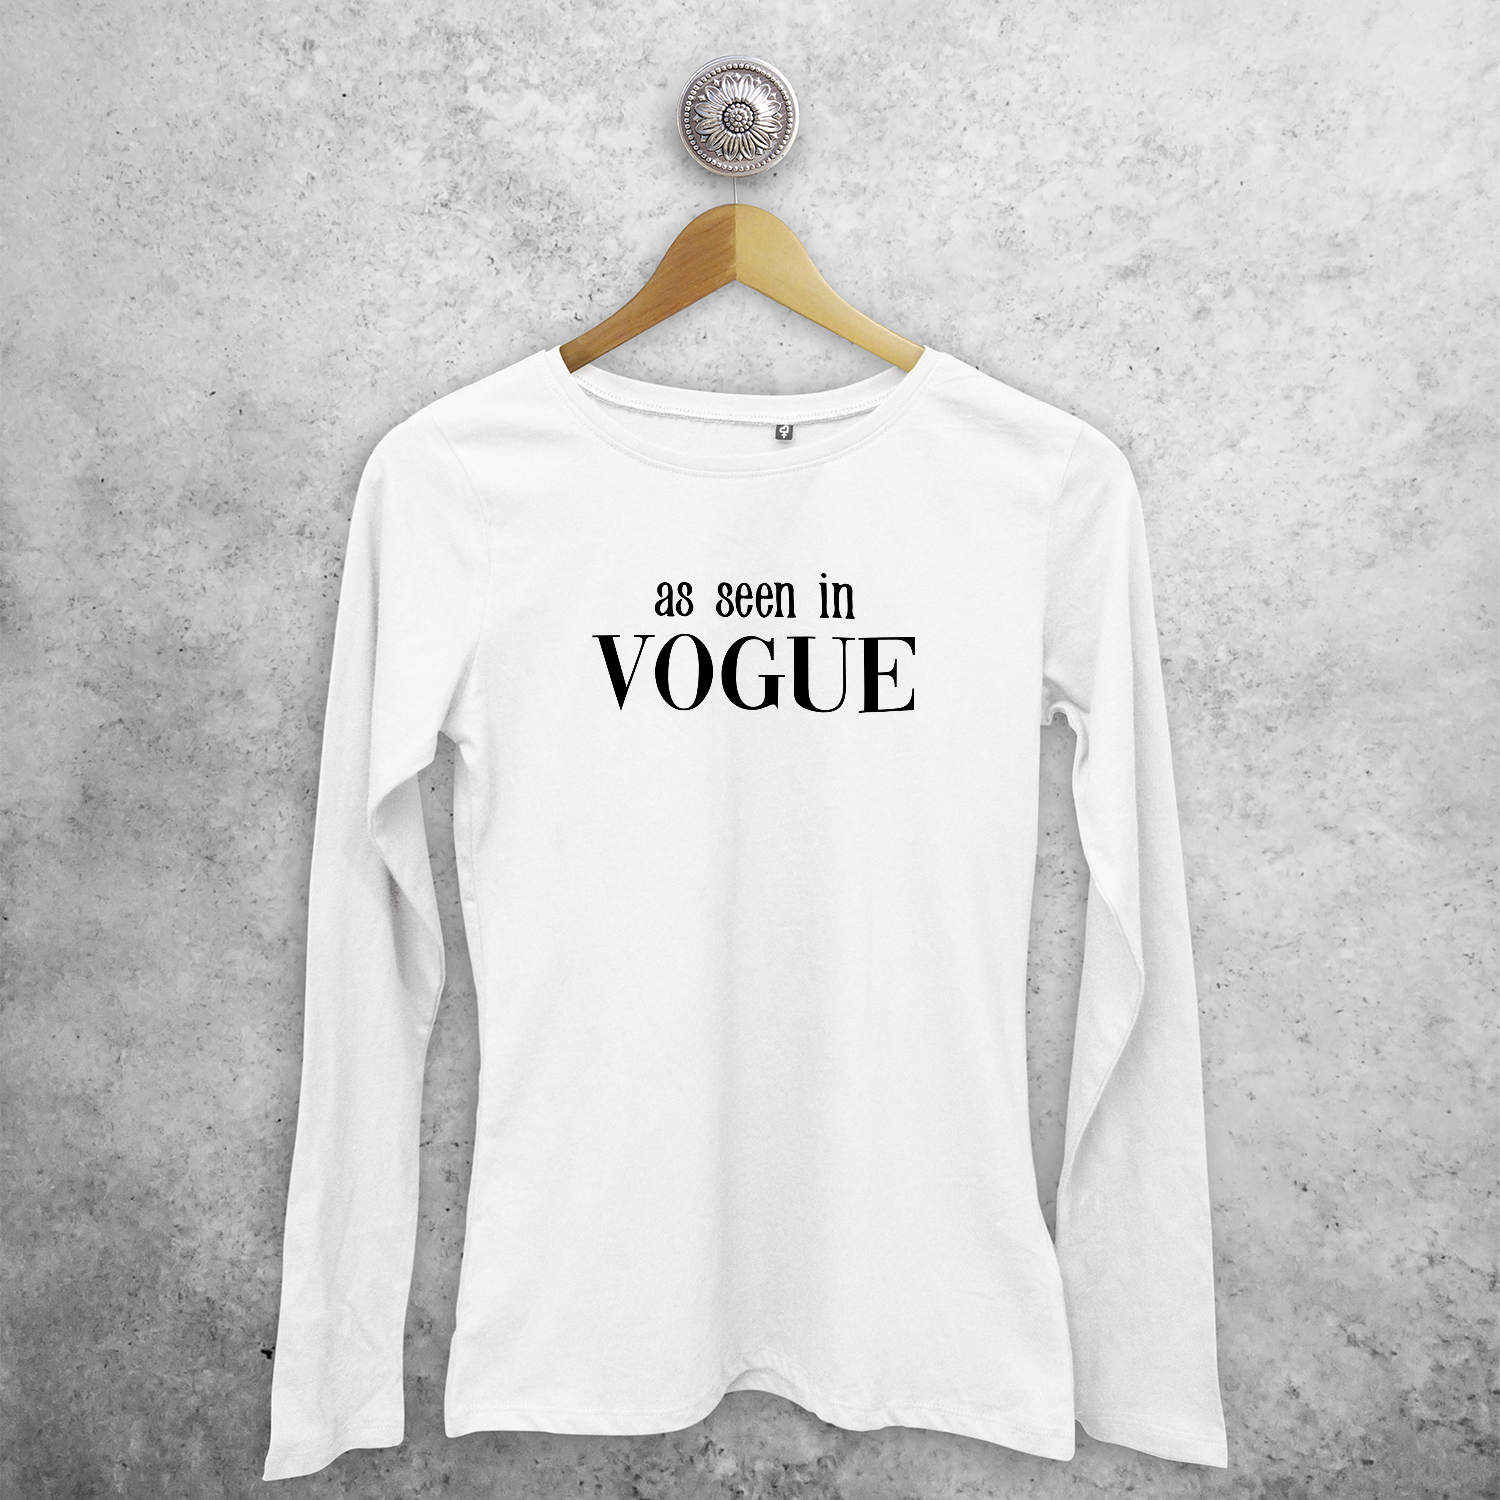 'As seen in Vogue' adult longsleeve shirt